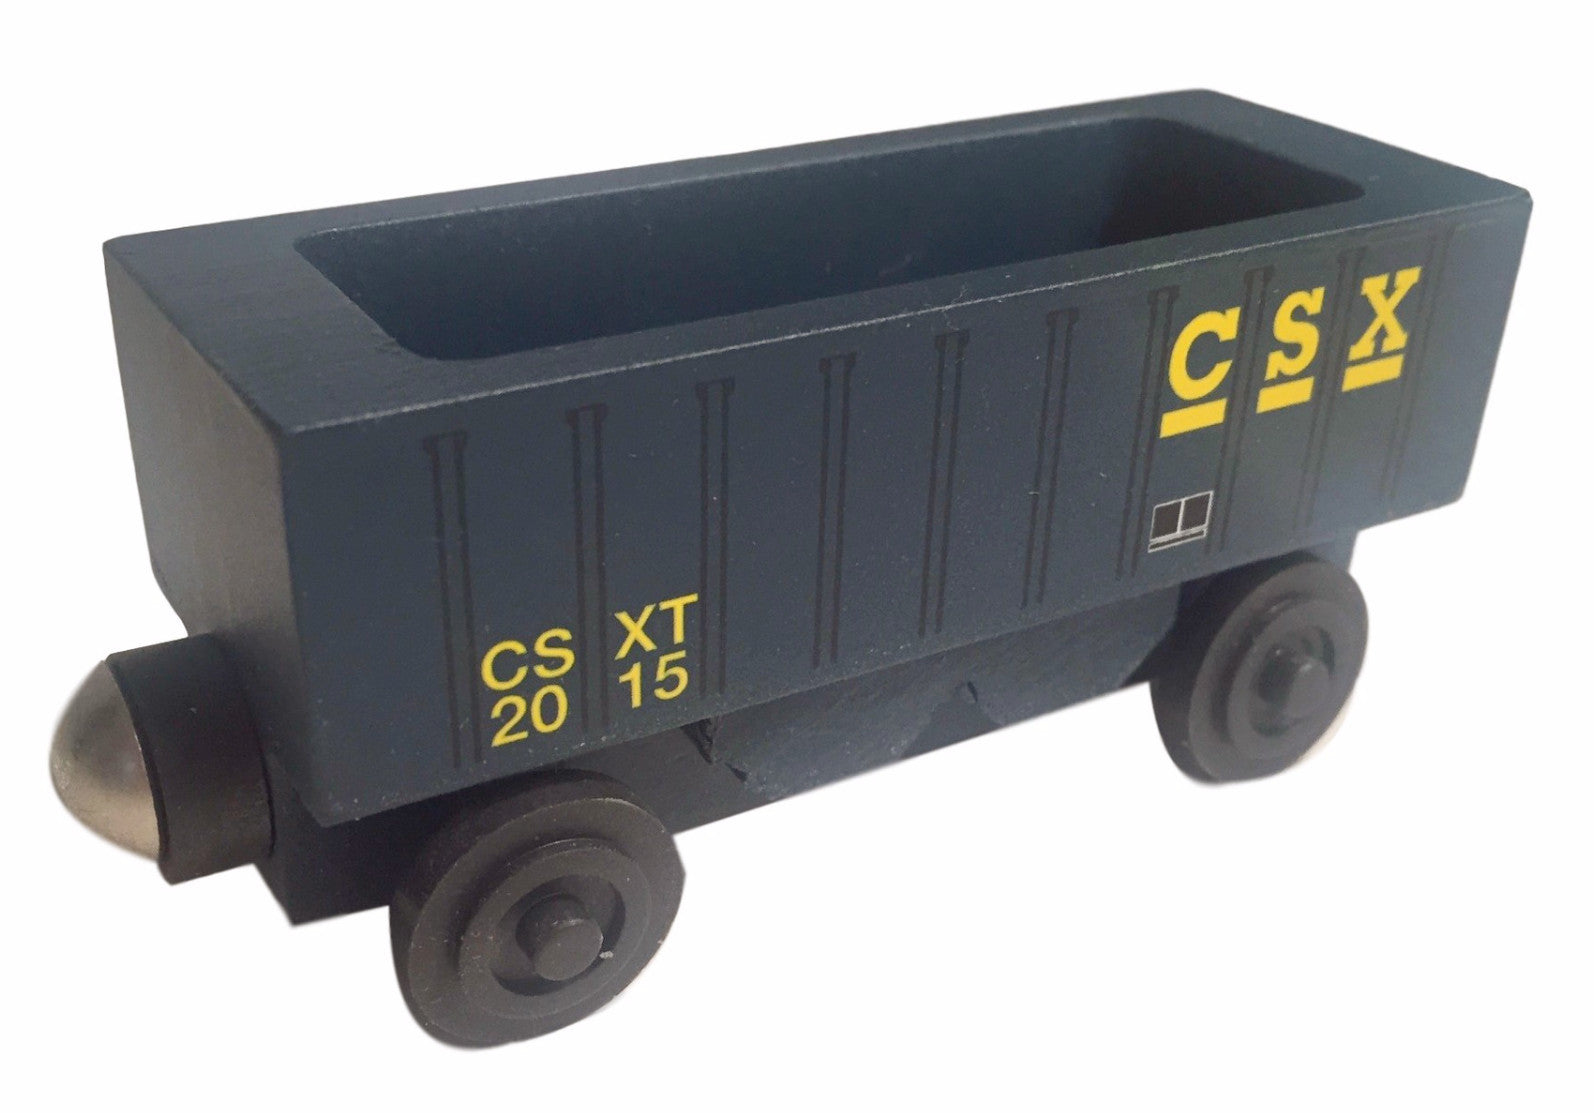 Csx Hopper The Whittle Shortline Railroad Wooden Toy Trains 2898